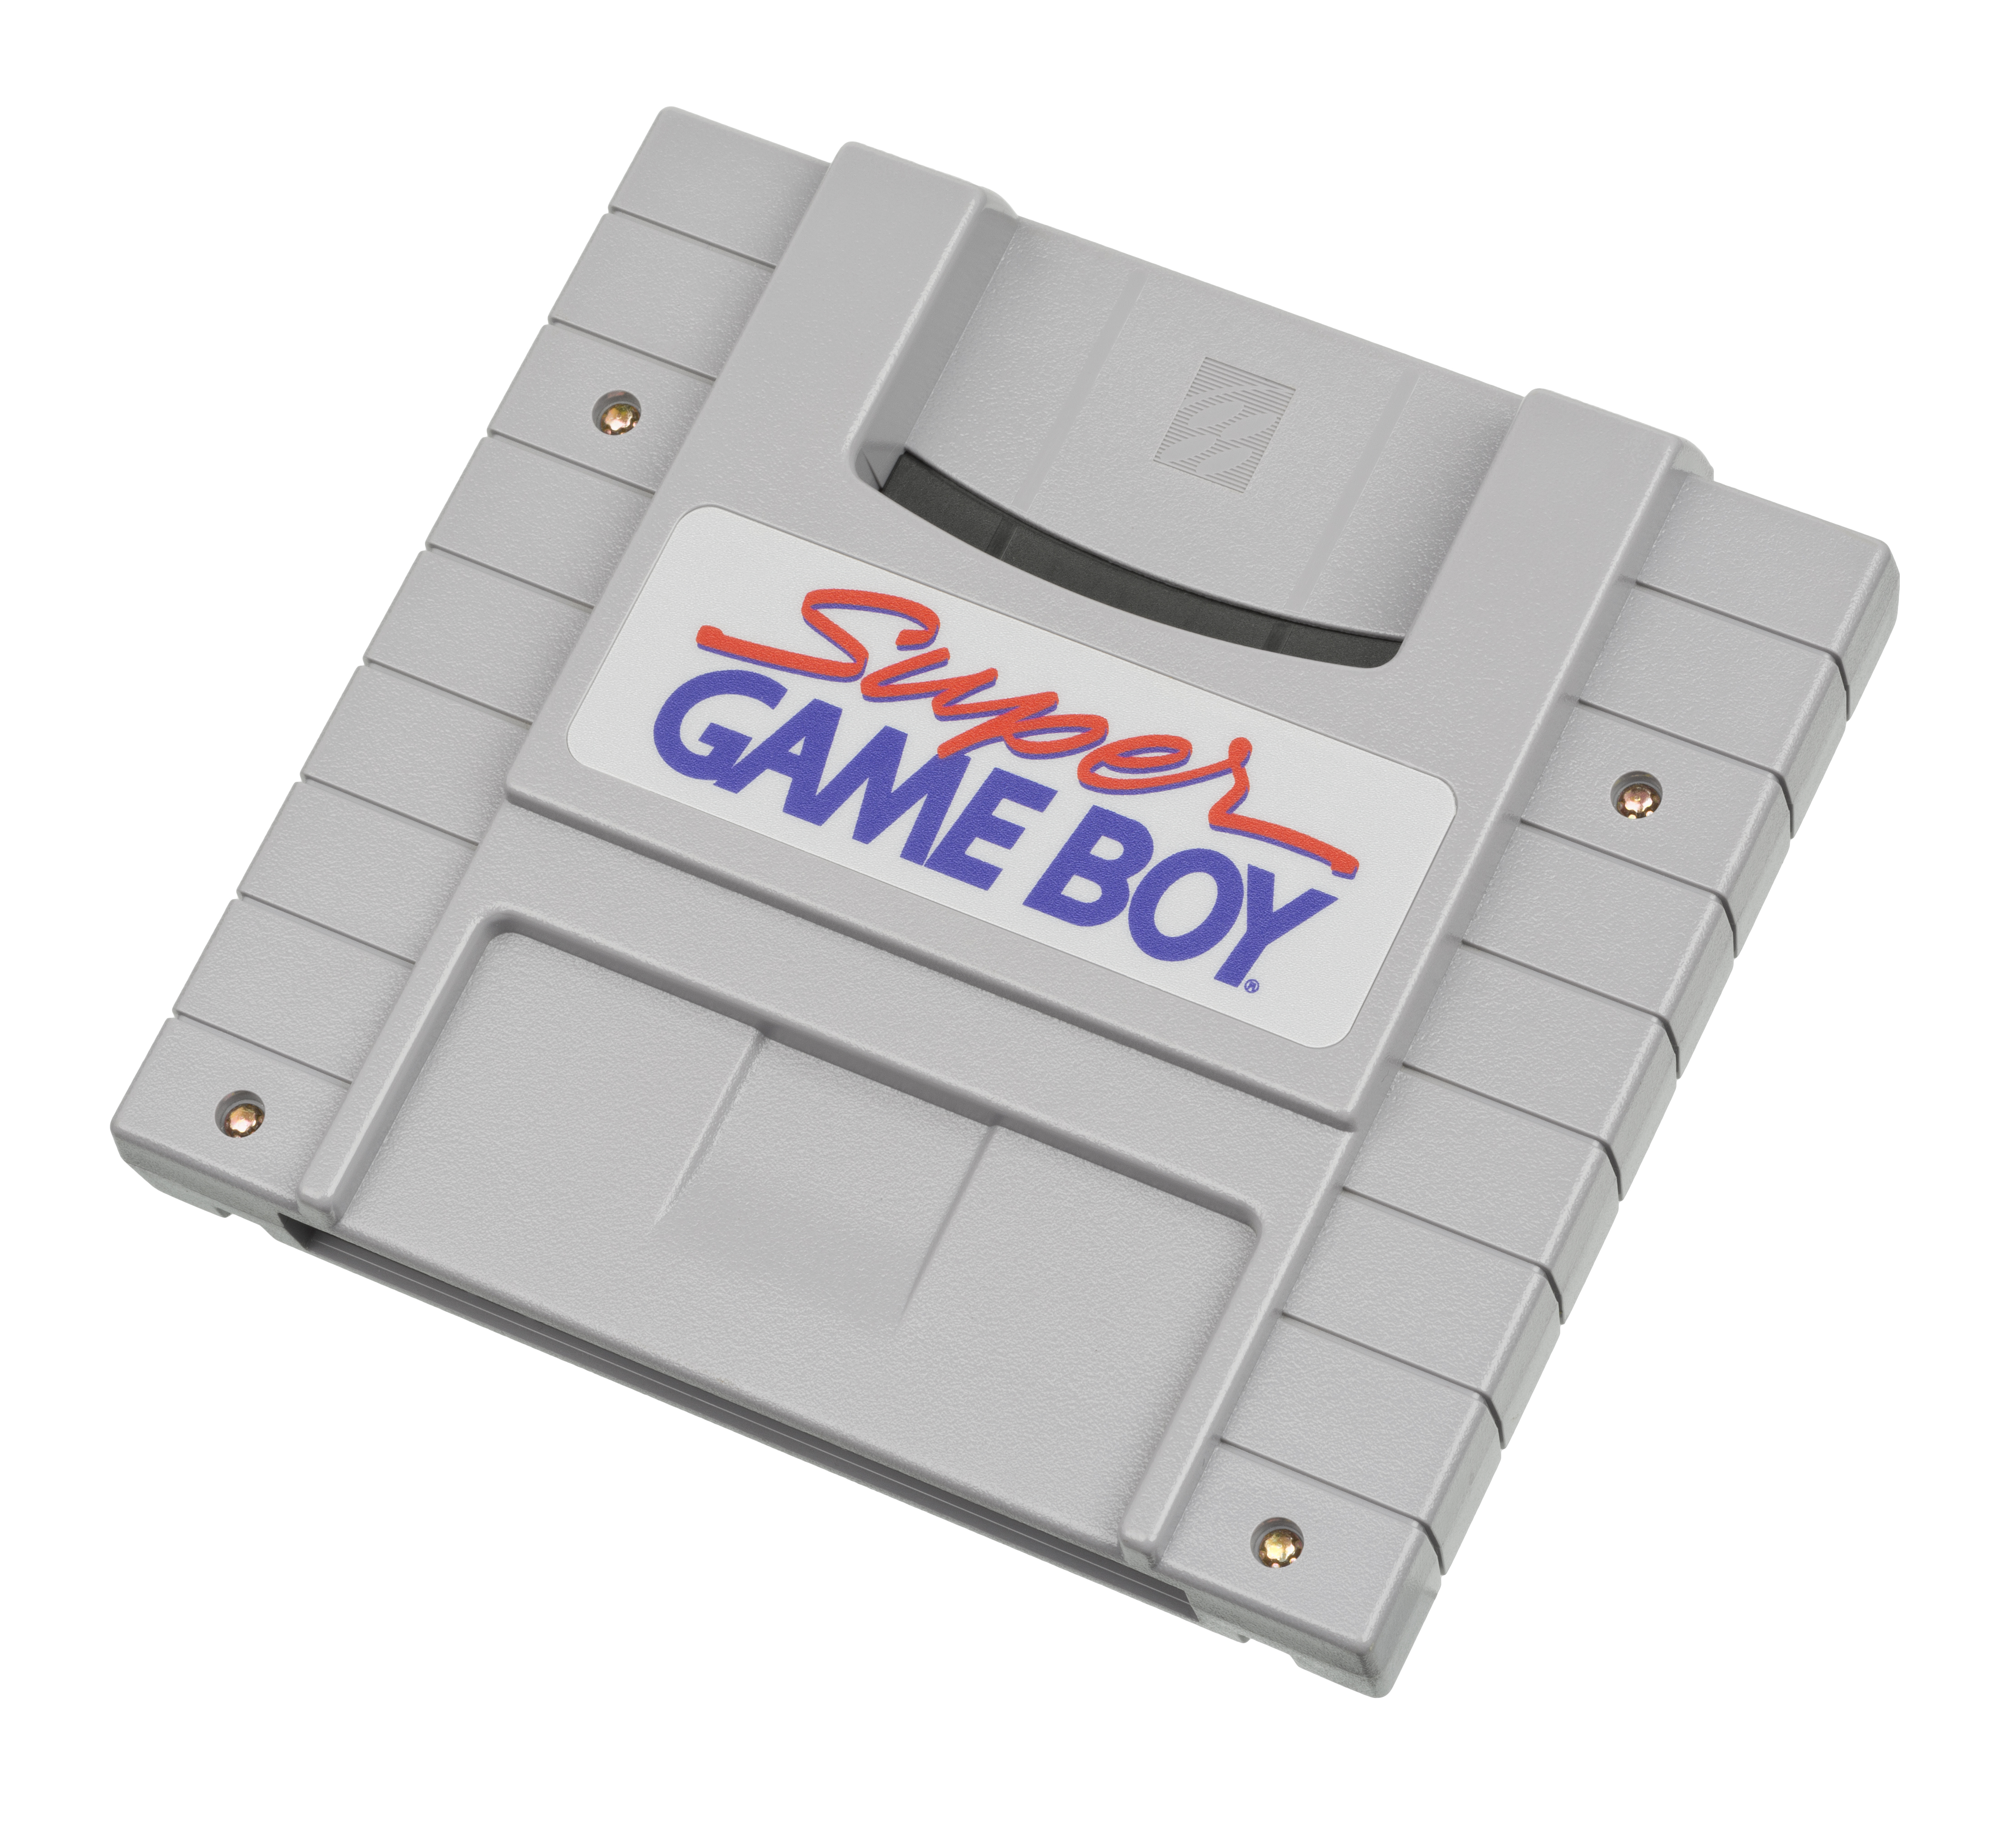 Game Boy Wikipedia